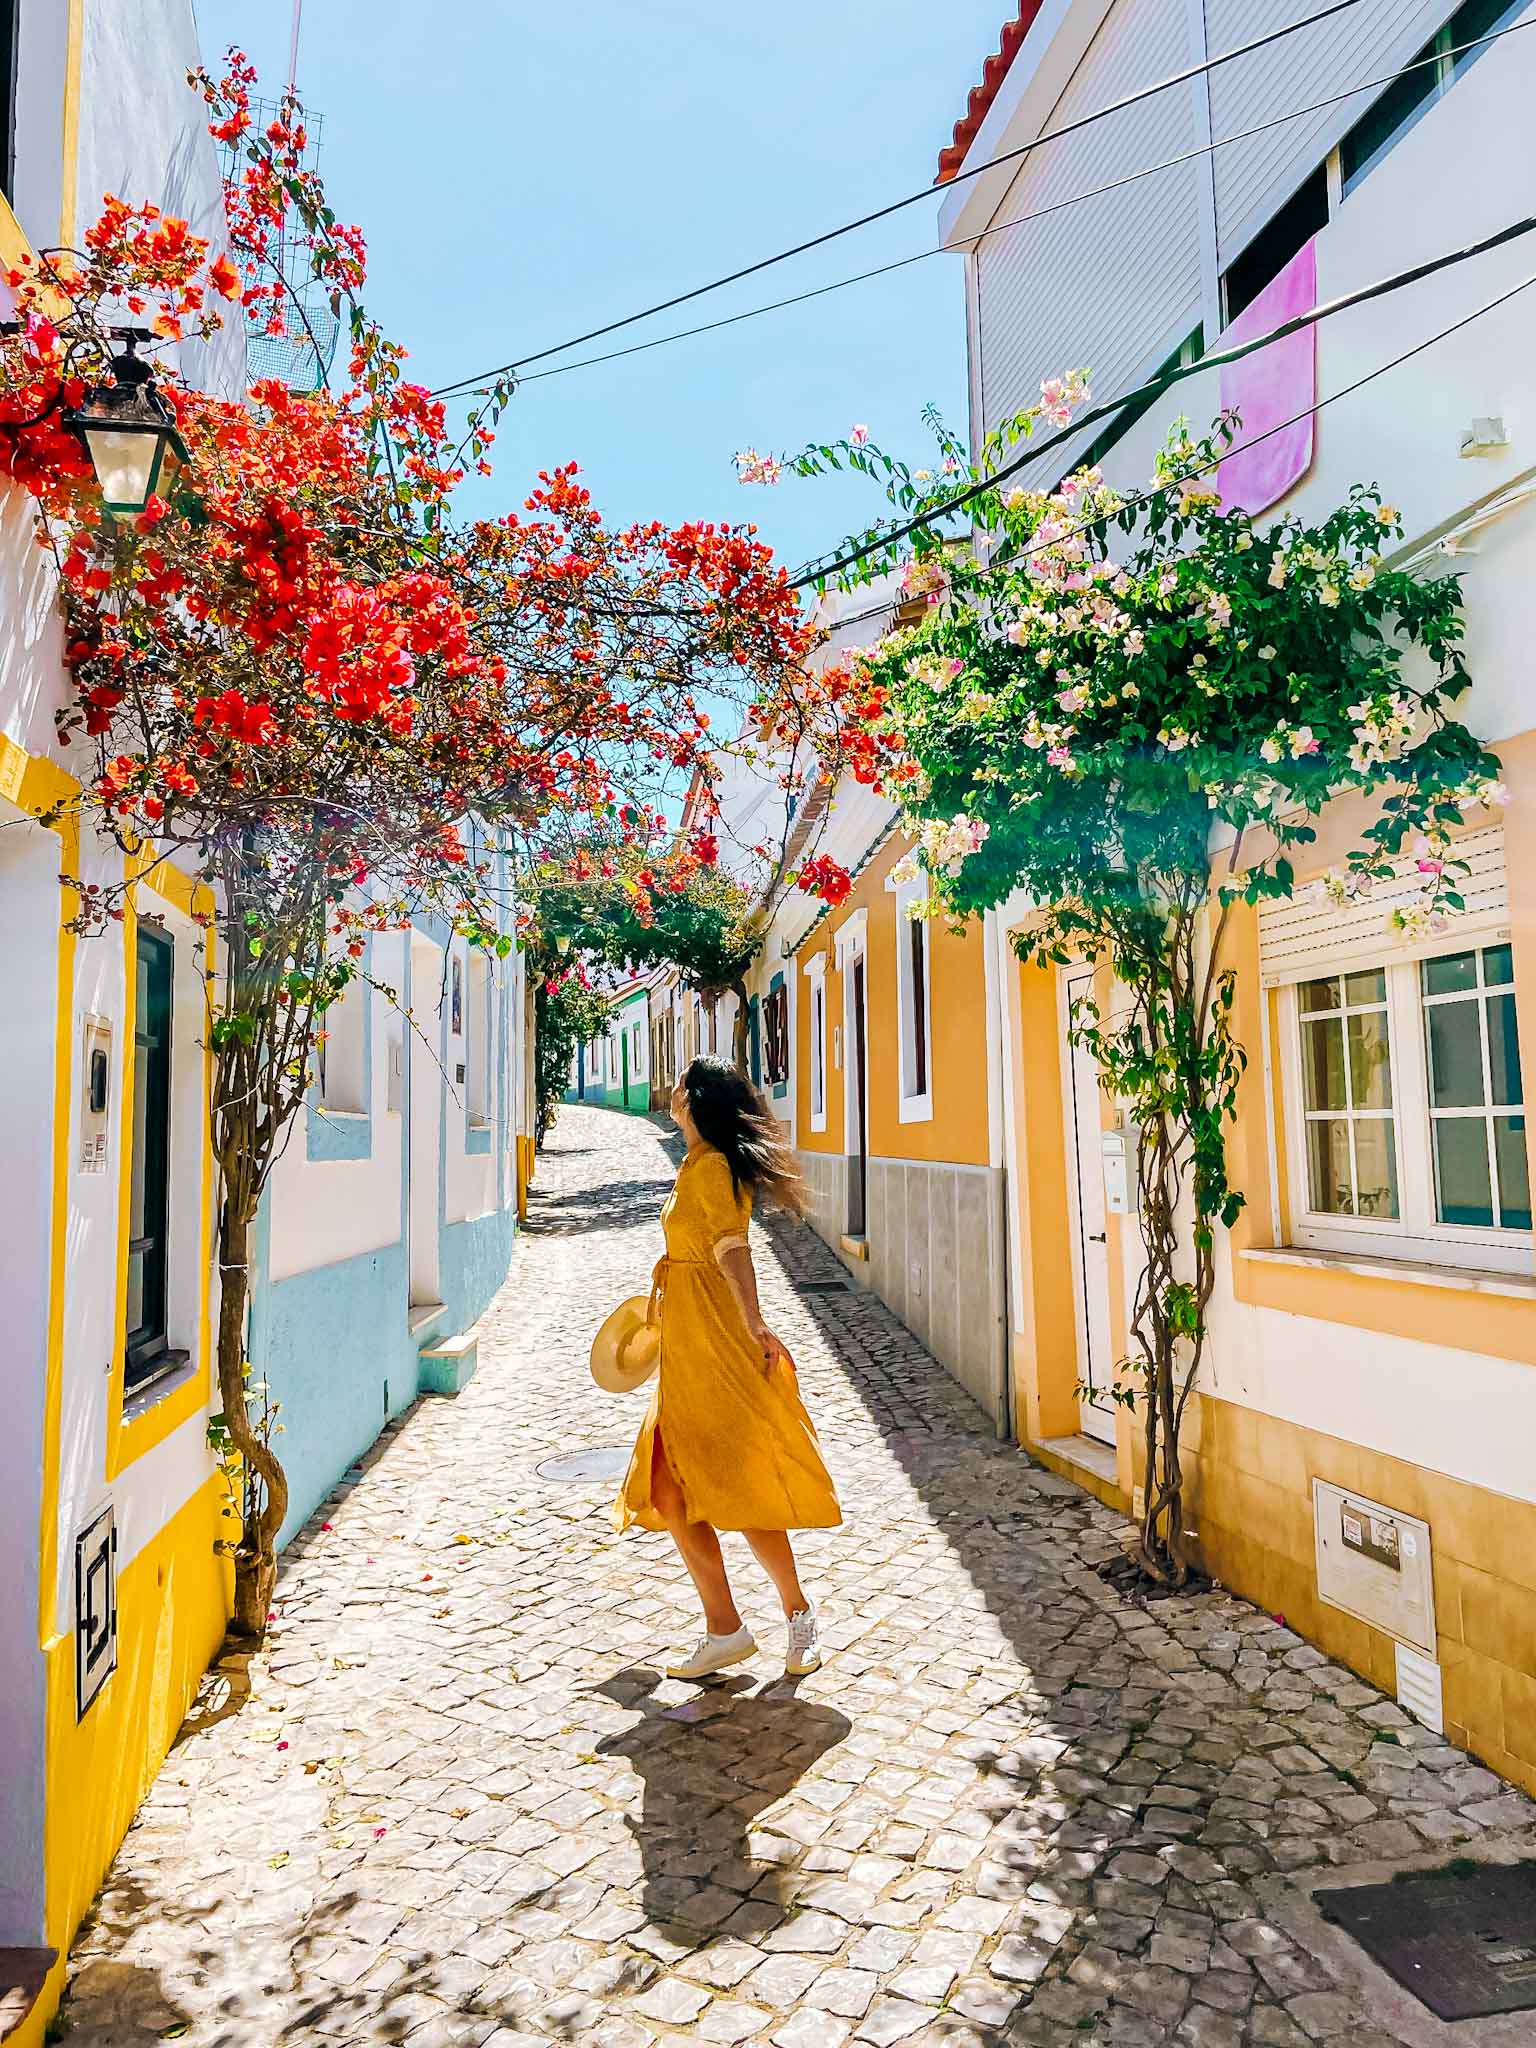 Best Instagram spots in Algarve in Portugal - Old village of Ferragudo